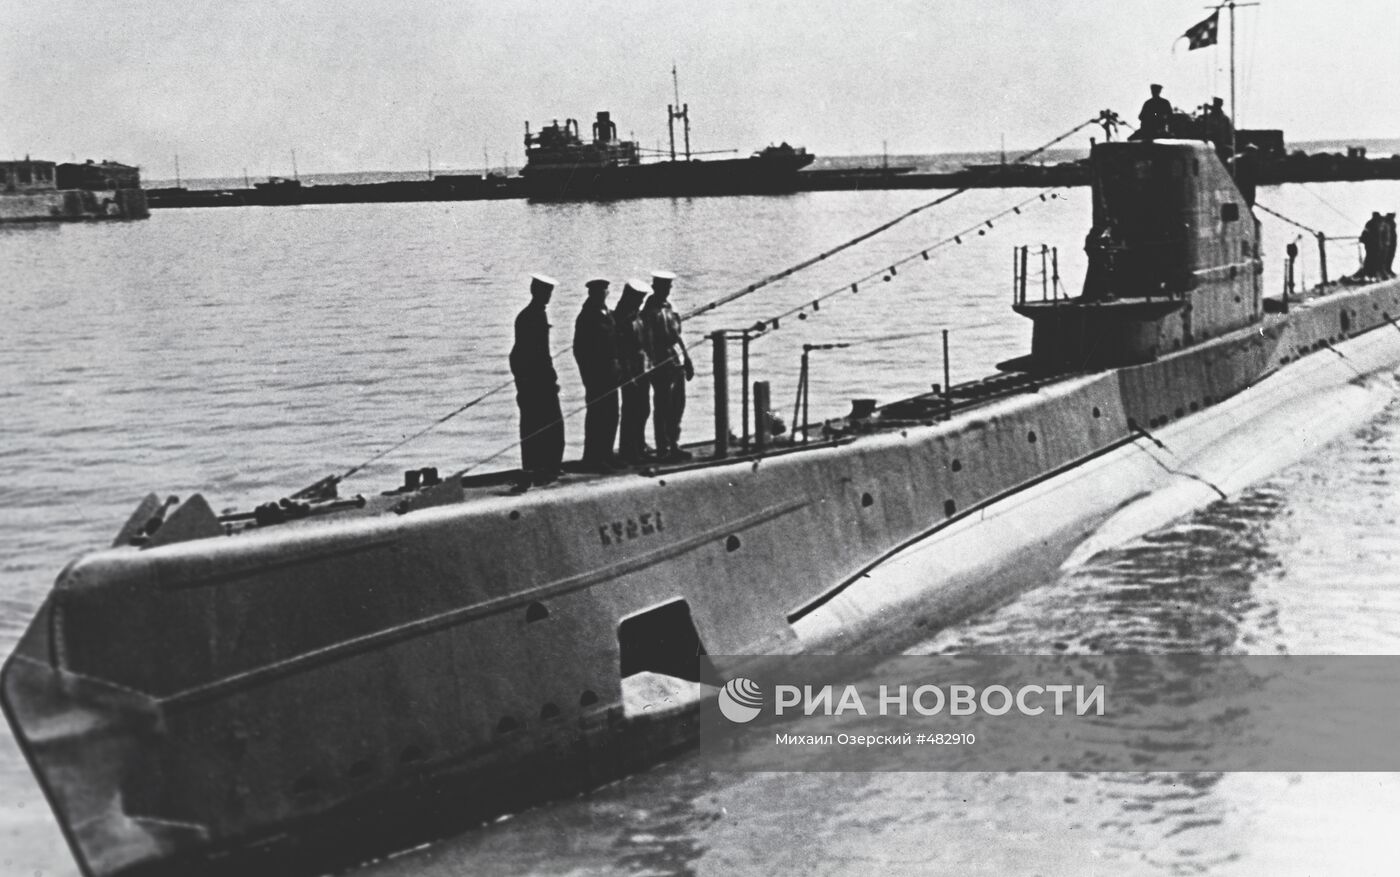 Подводная лодка типа "Щ"